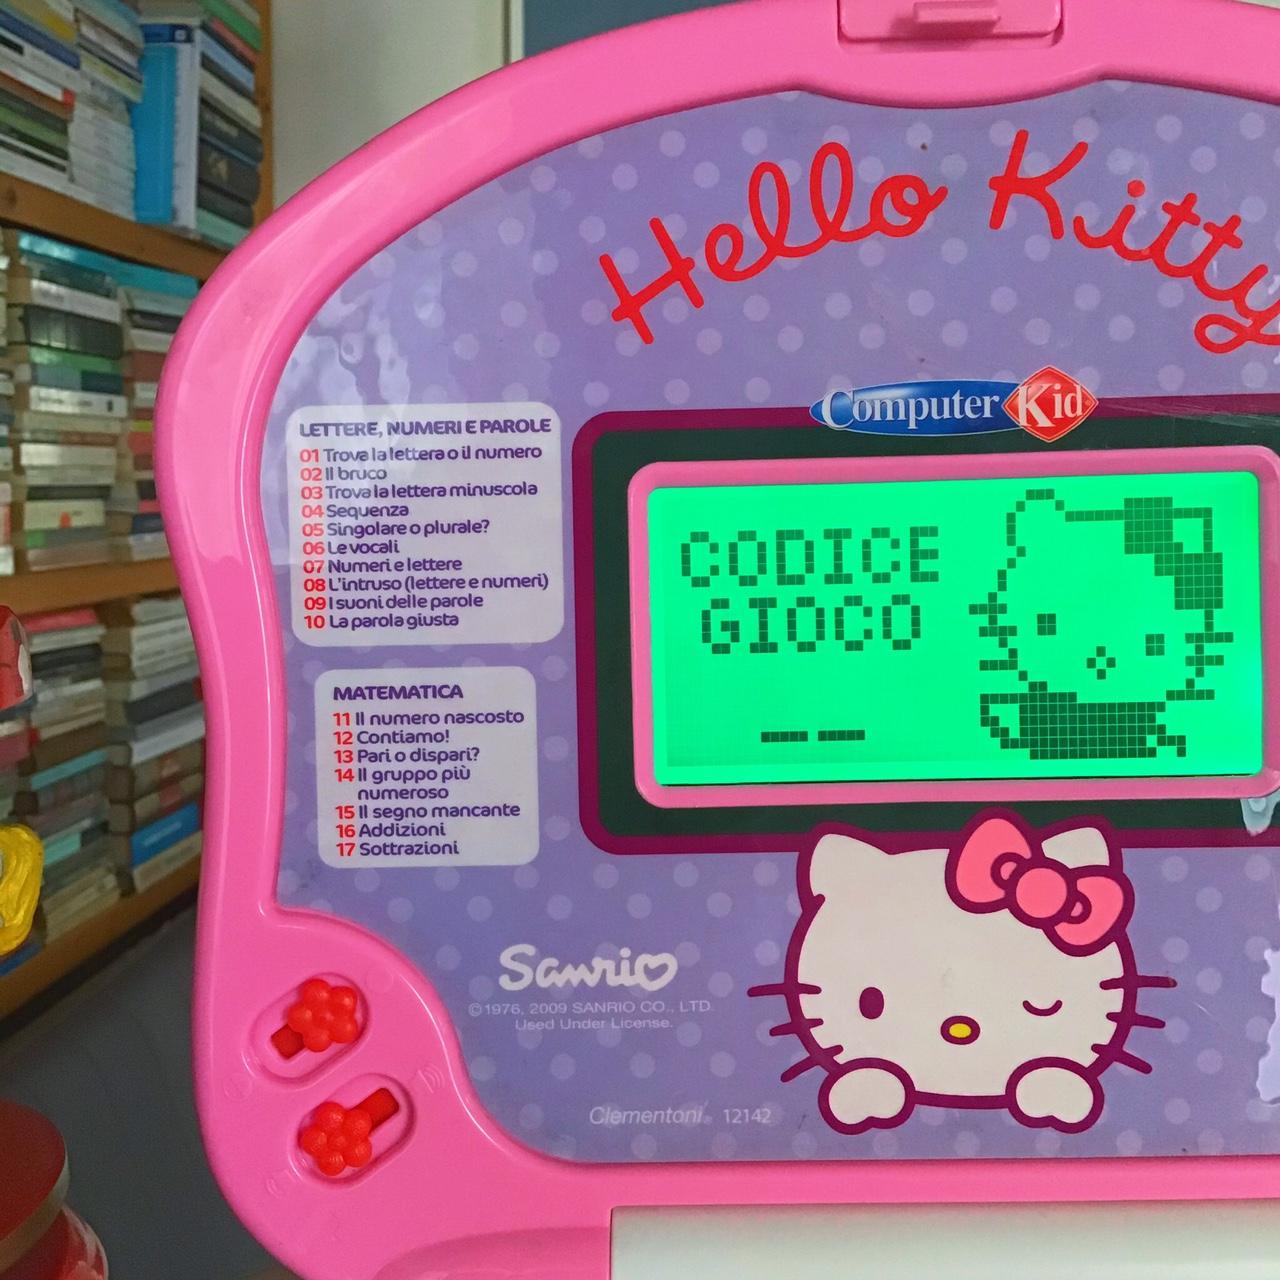 Rare Designer Vintage 2012 Hello Kitty sanrio Louis - Depop